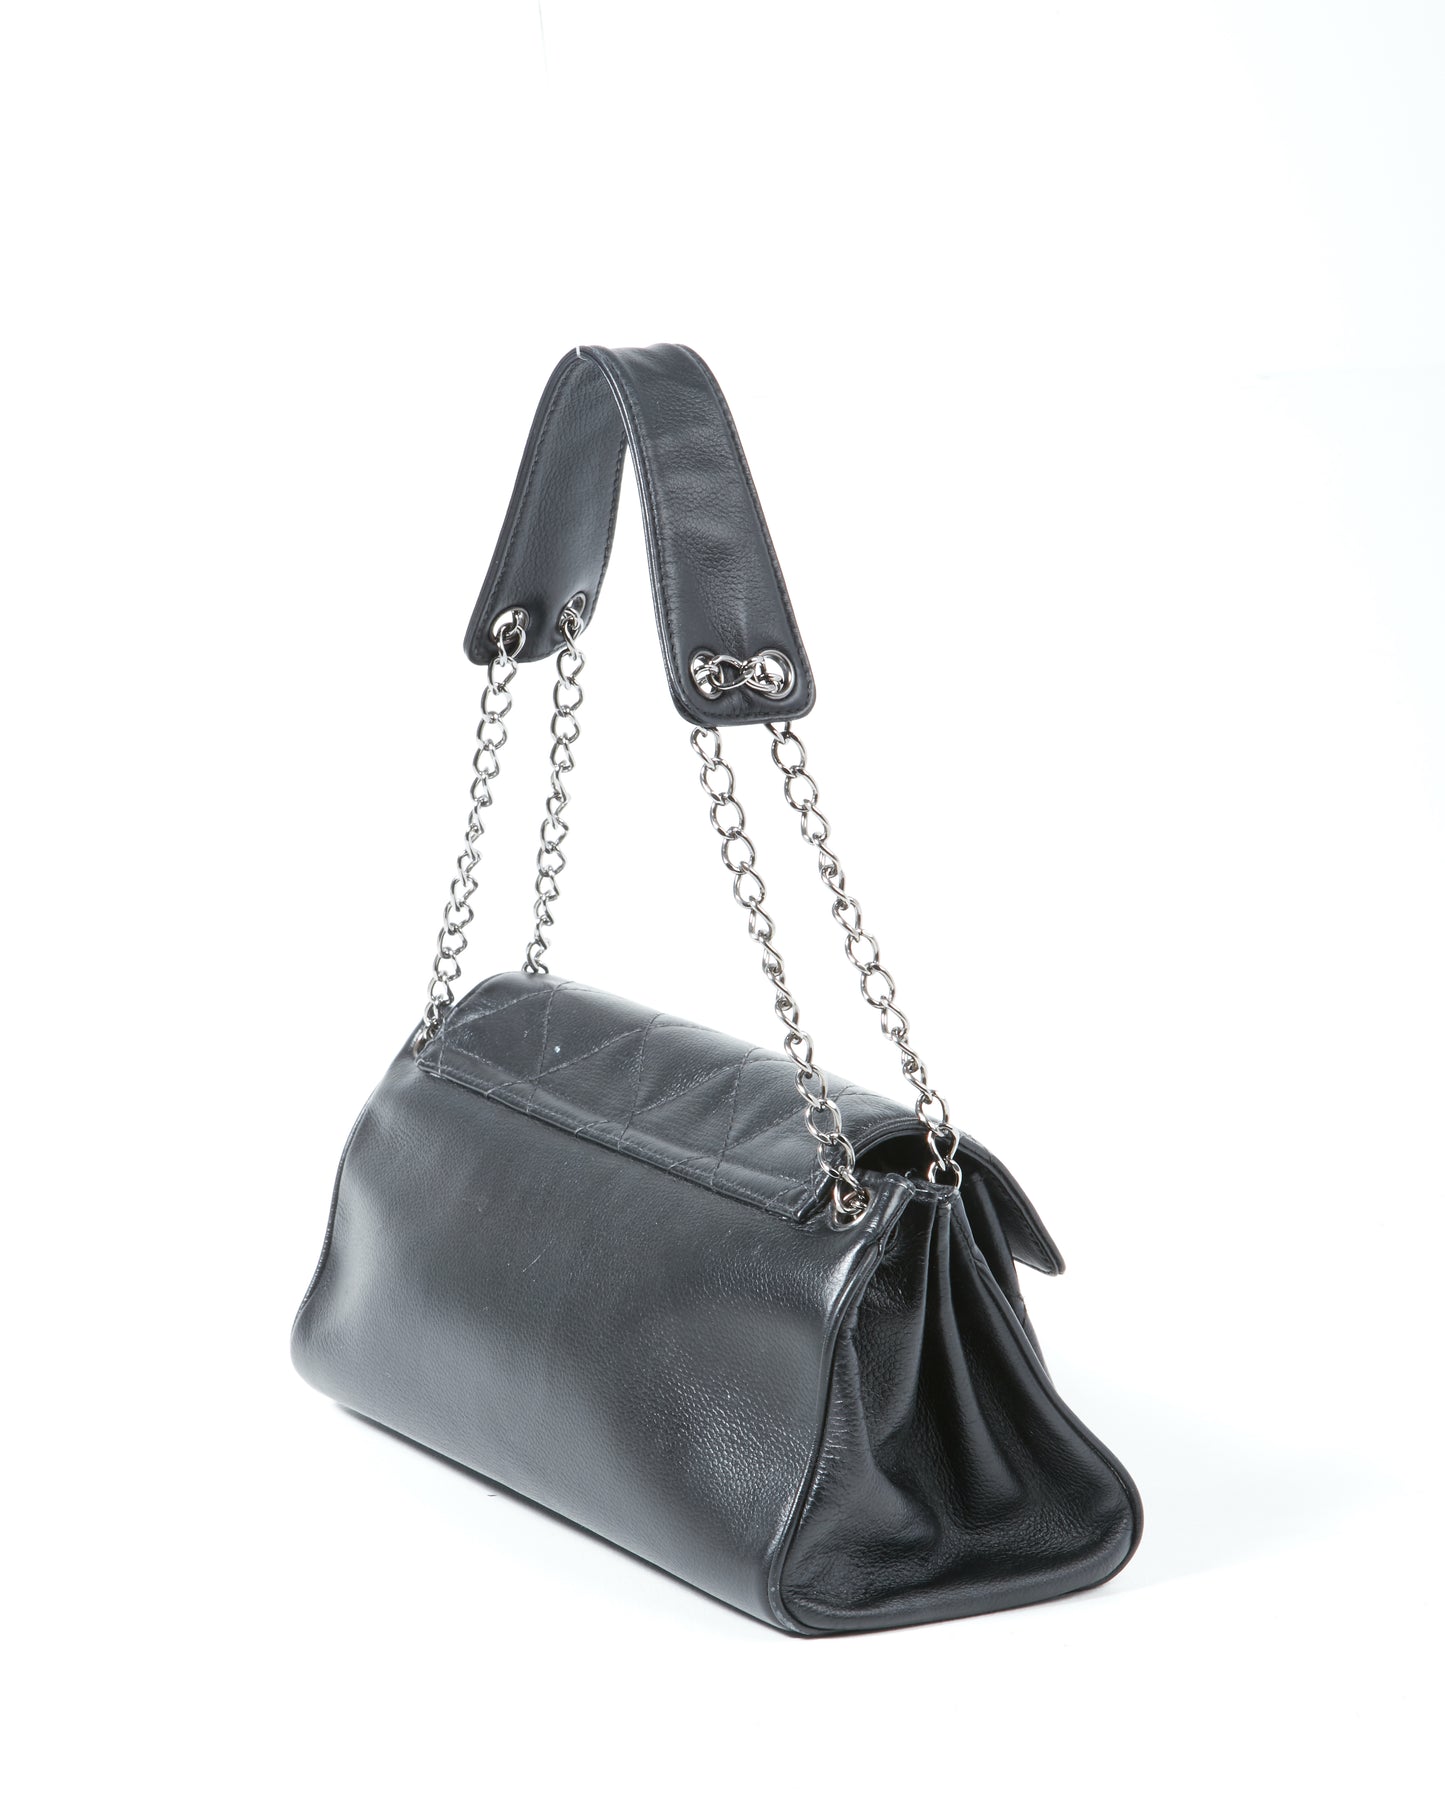 Chanel Black Caviar Leather 2003 Small Shoulder Bag